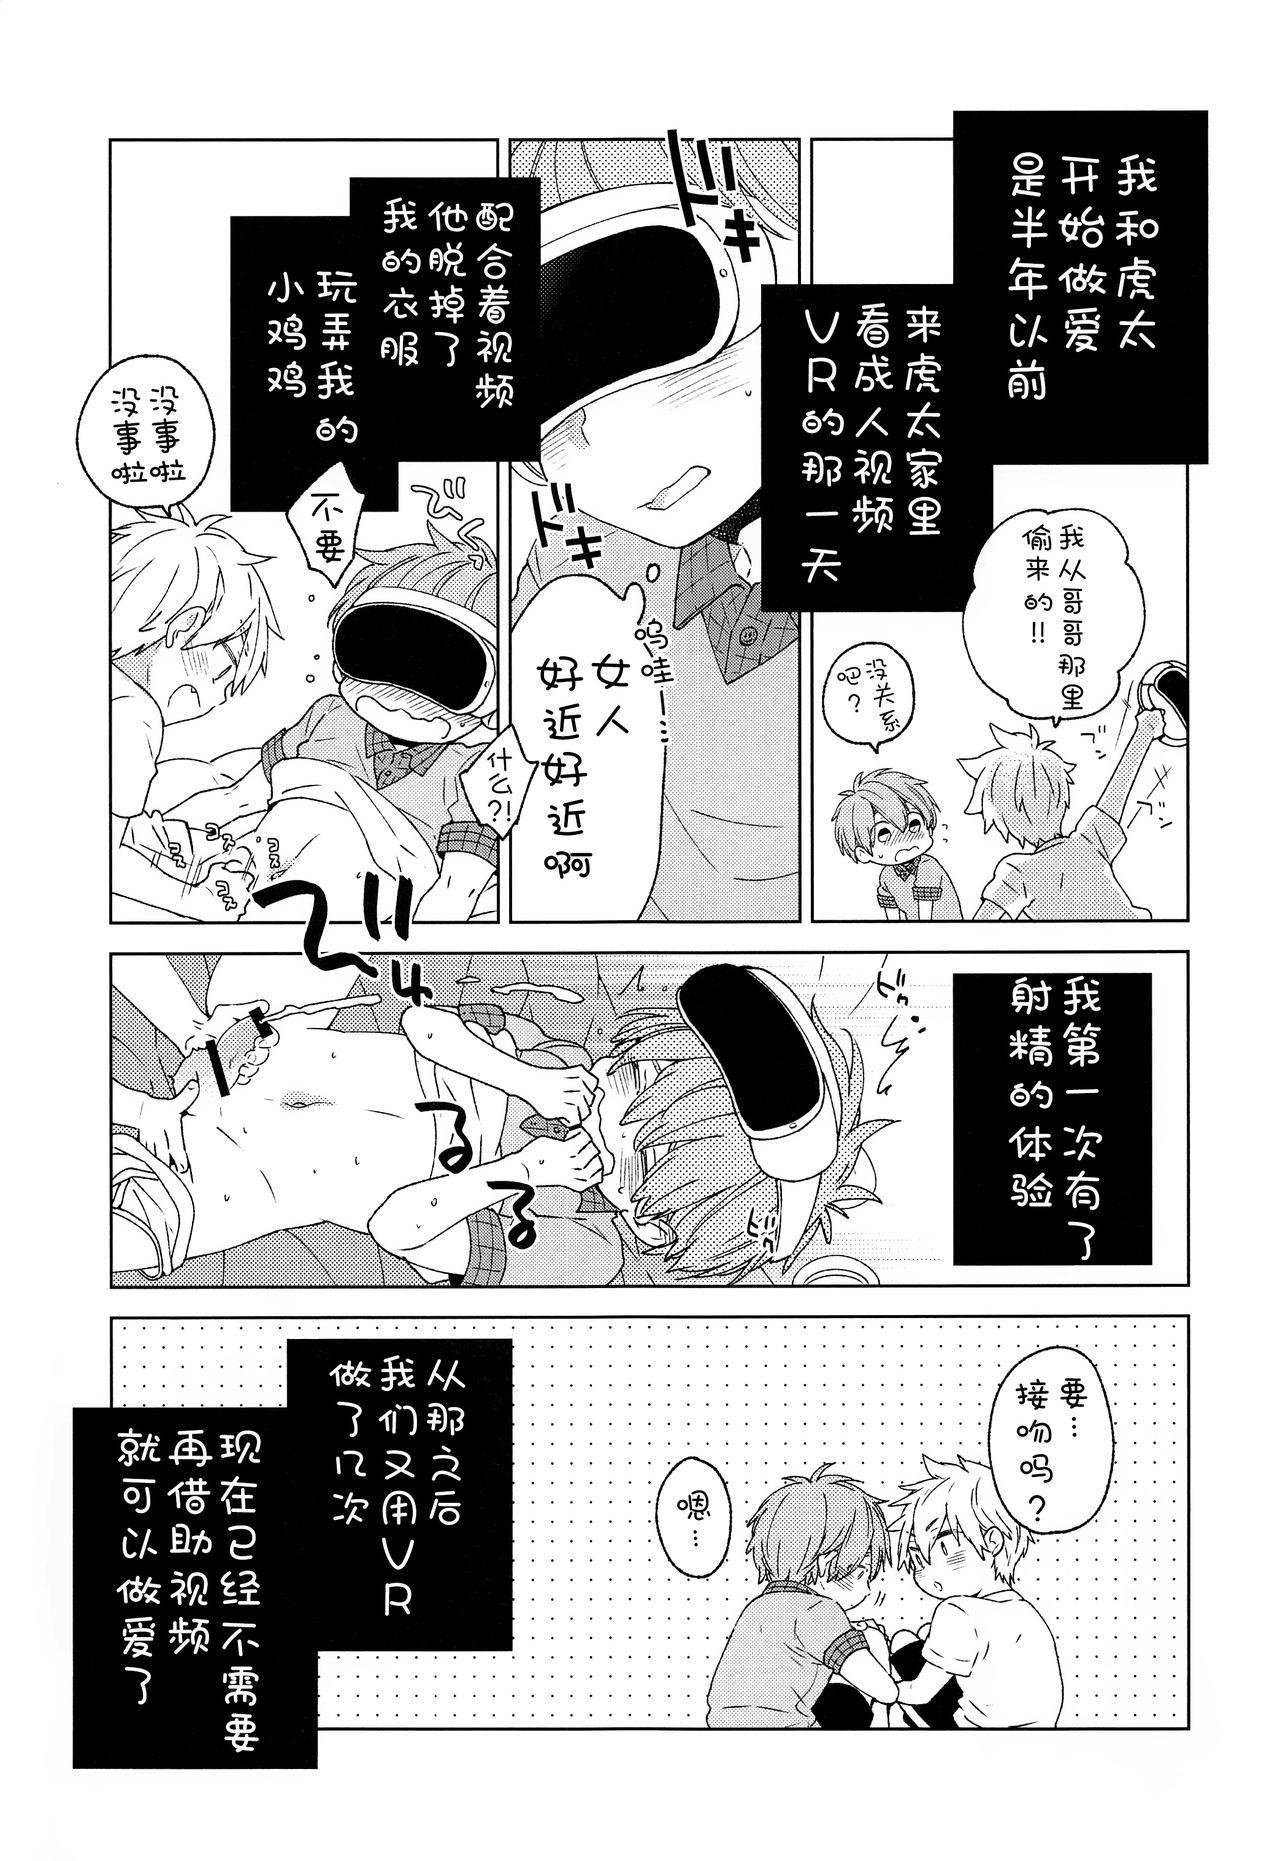 Orgy Tomodachi to Suru no wa Warui Koto? - Is it wrong to have sex with my friend? - Original Hard - Page 4